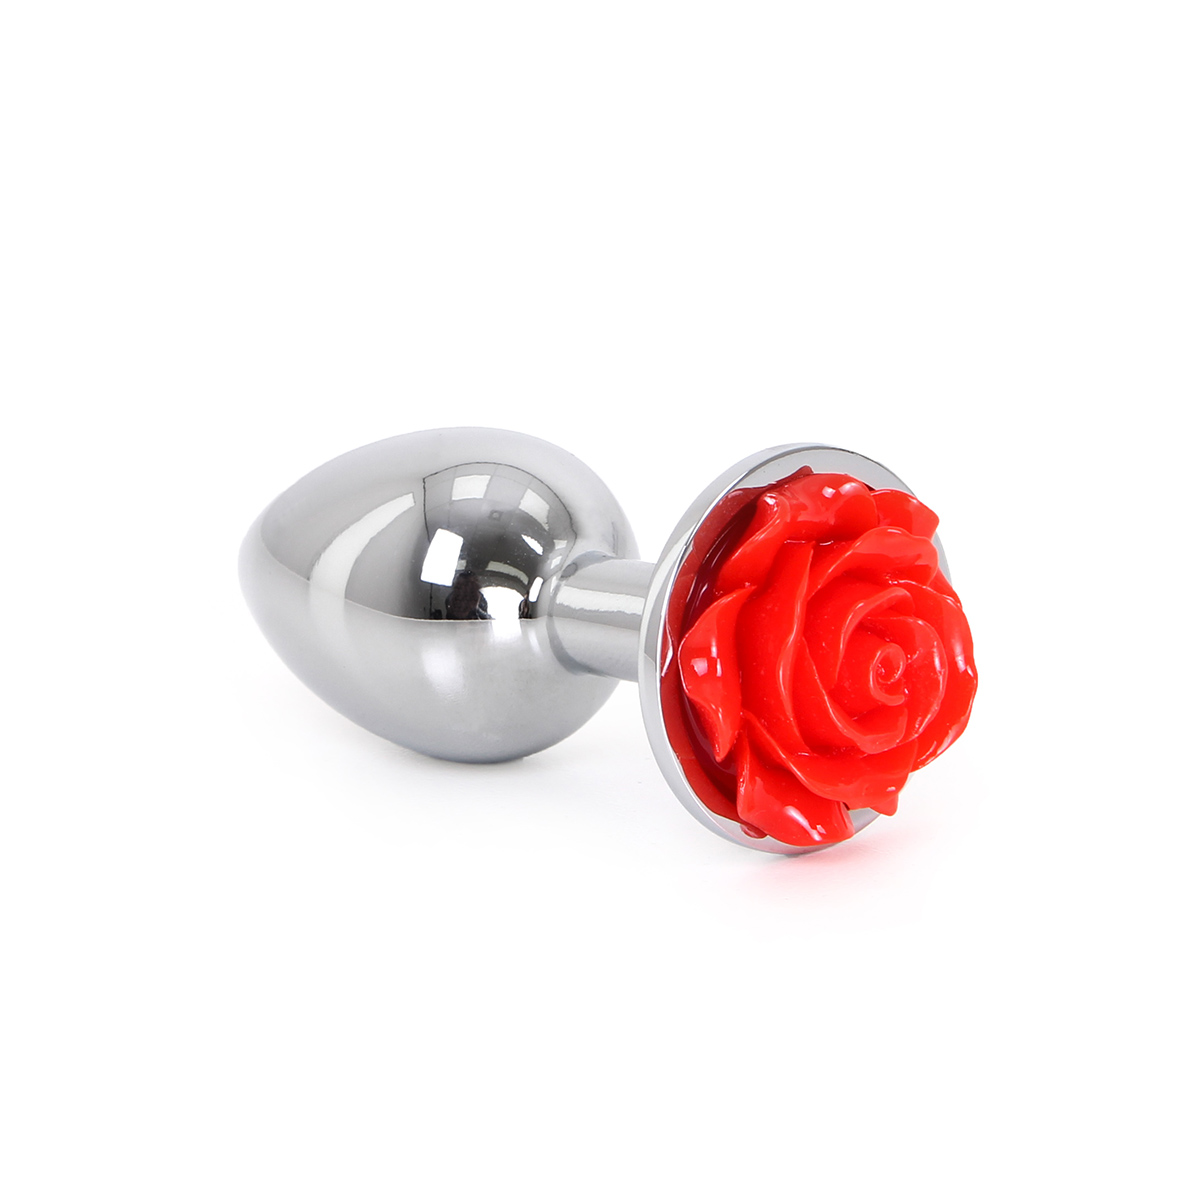 Aluminium-Buttplug-Red-Rose-OPR-2820038-2